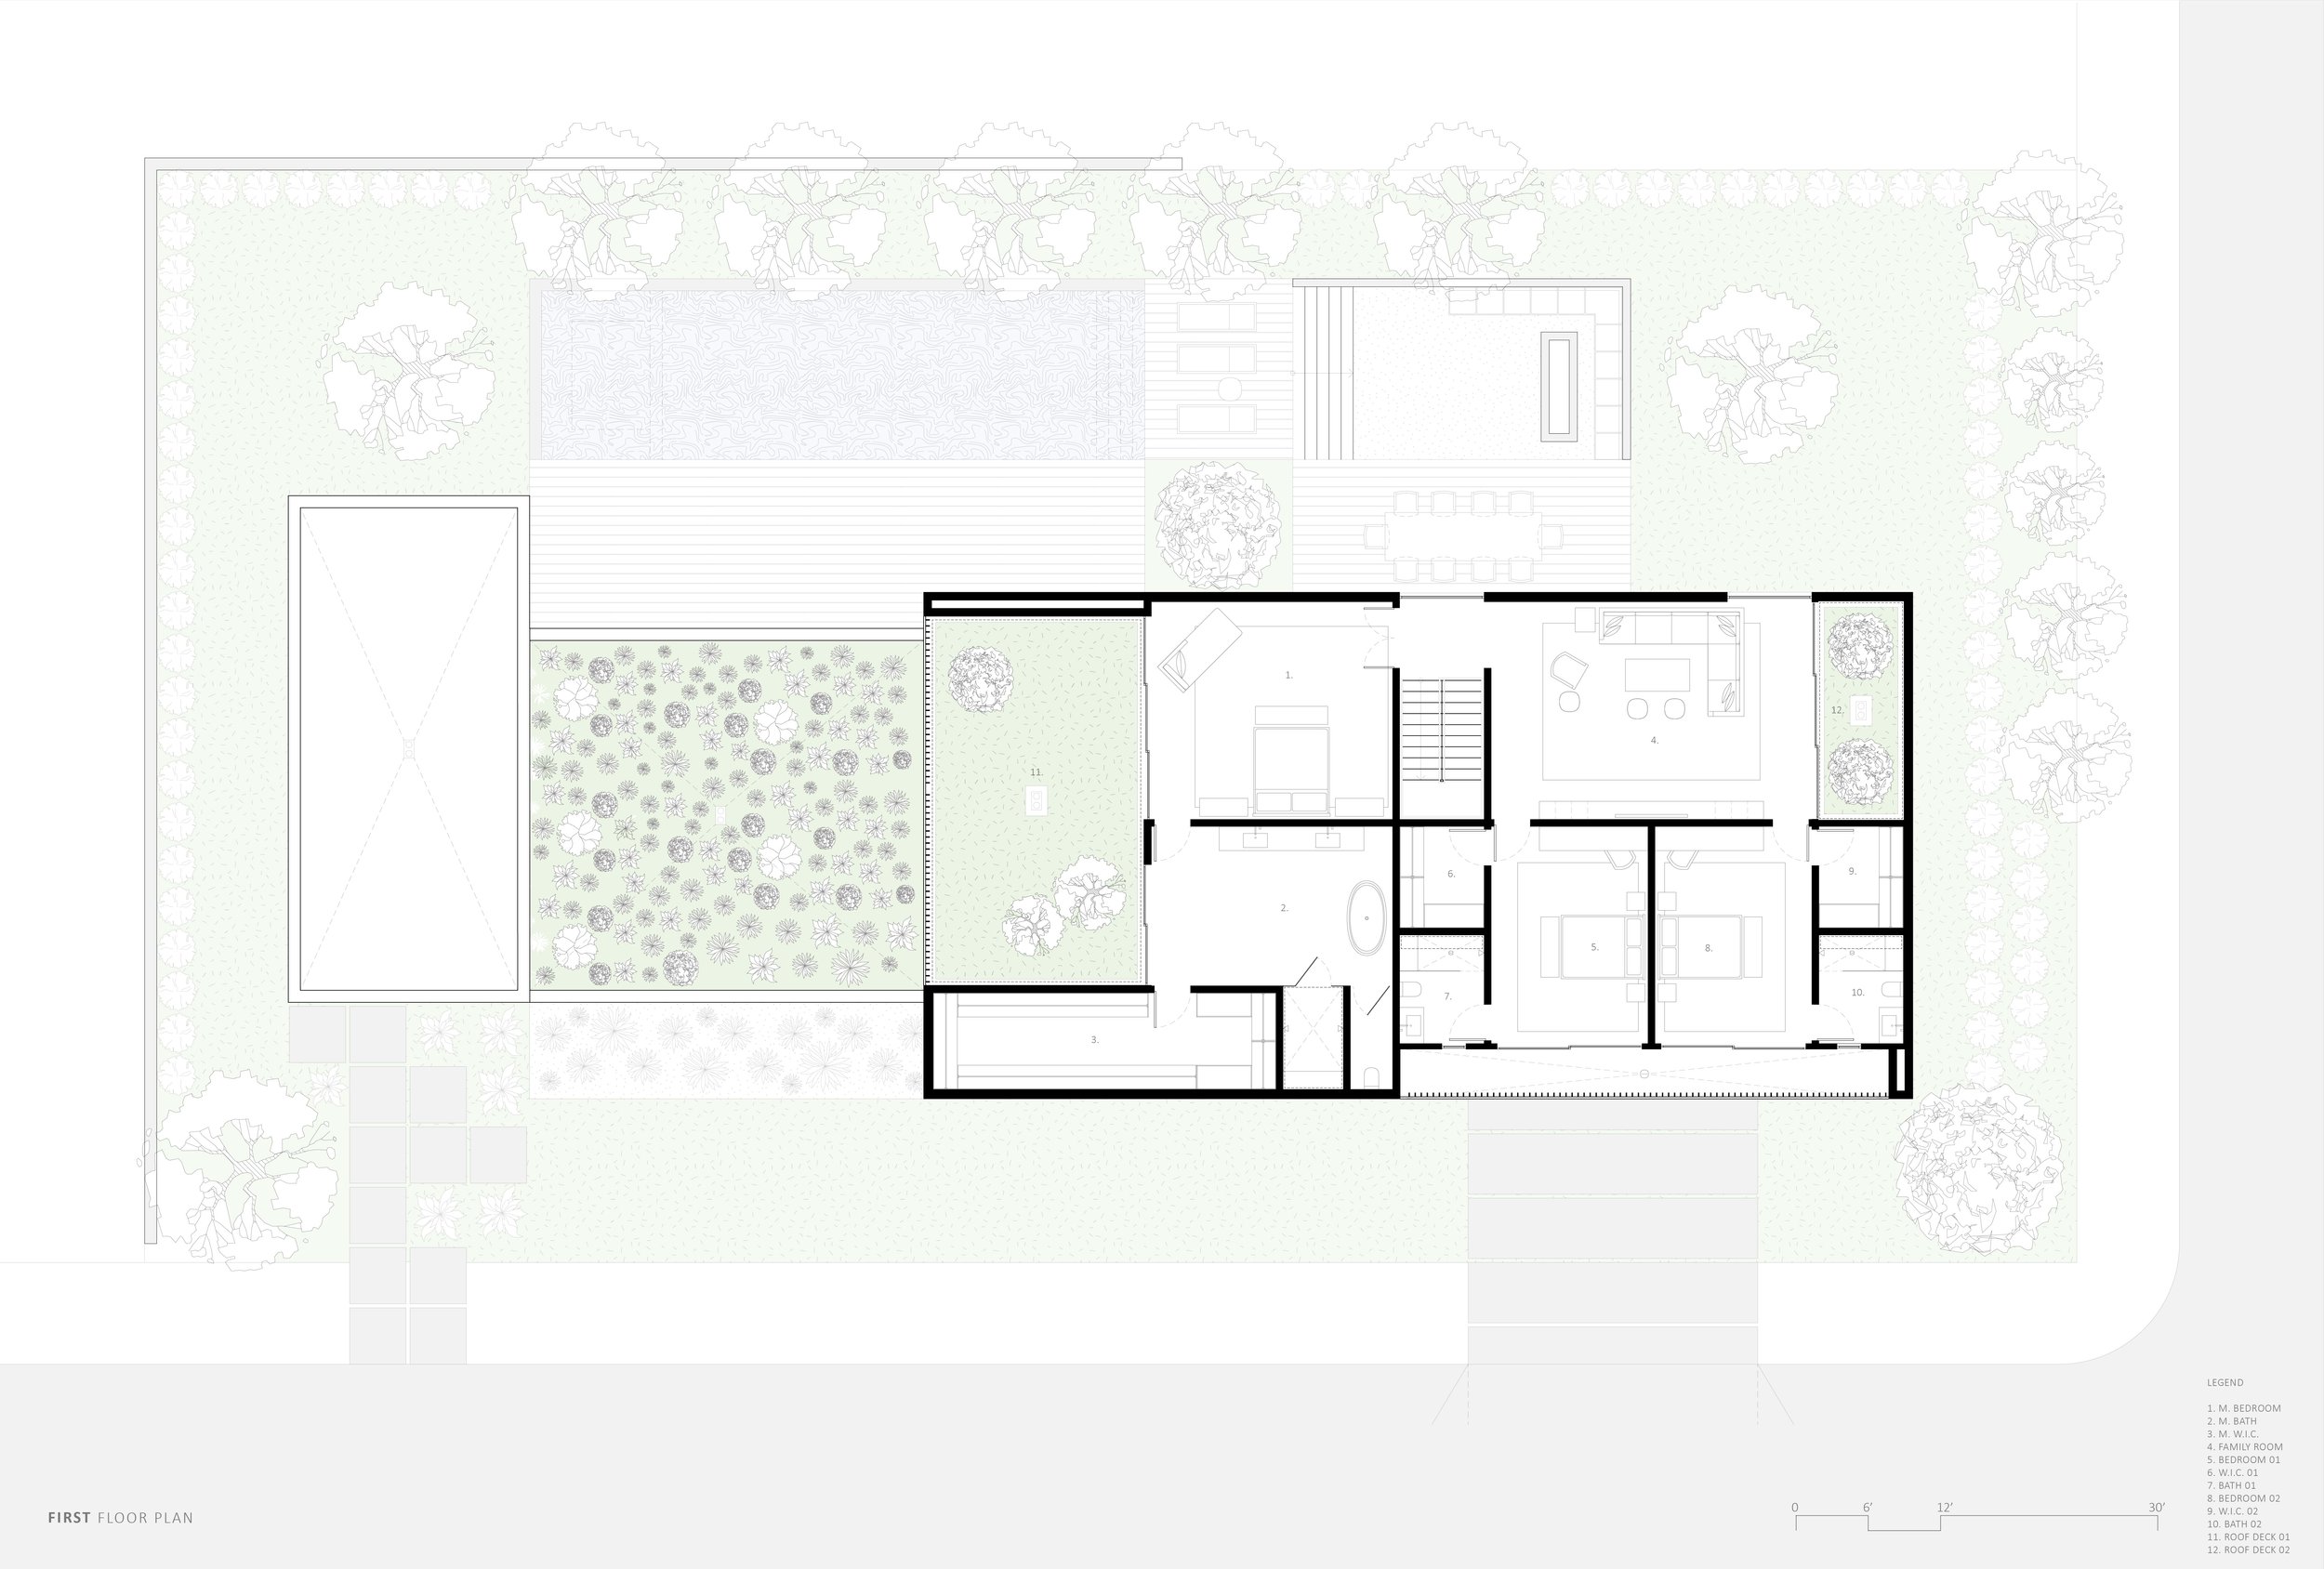 bspk-design-architecture-california-7800-residenital-block-house-first floor plan.jpg